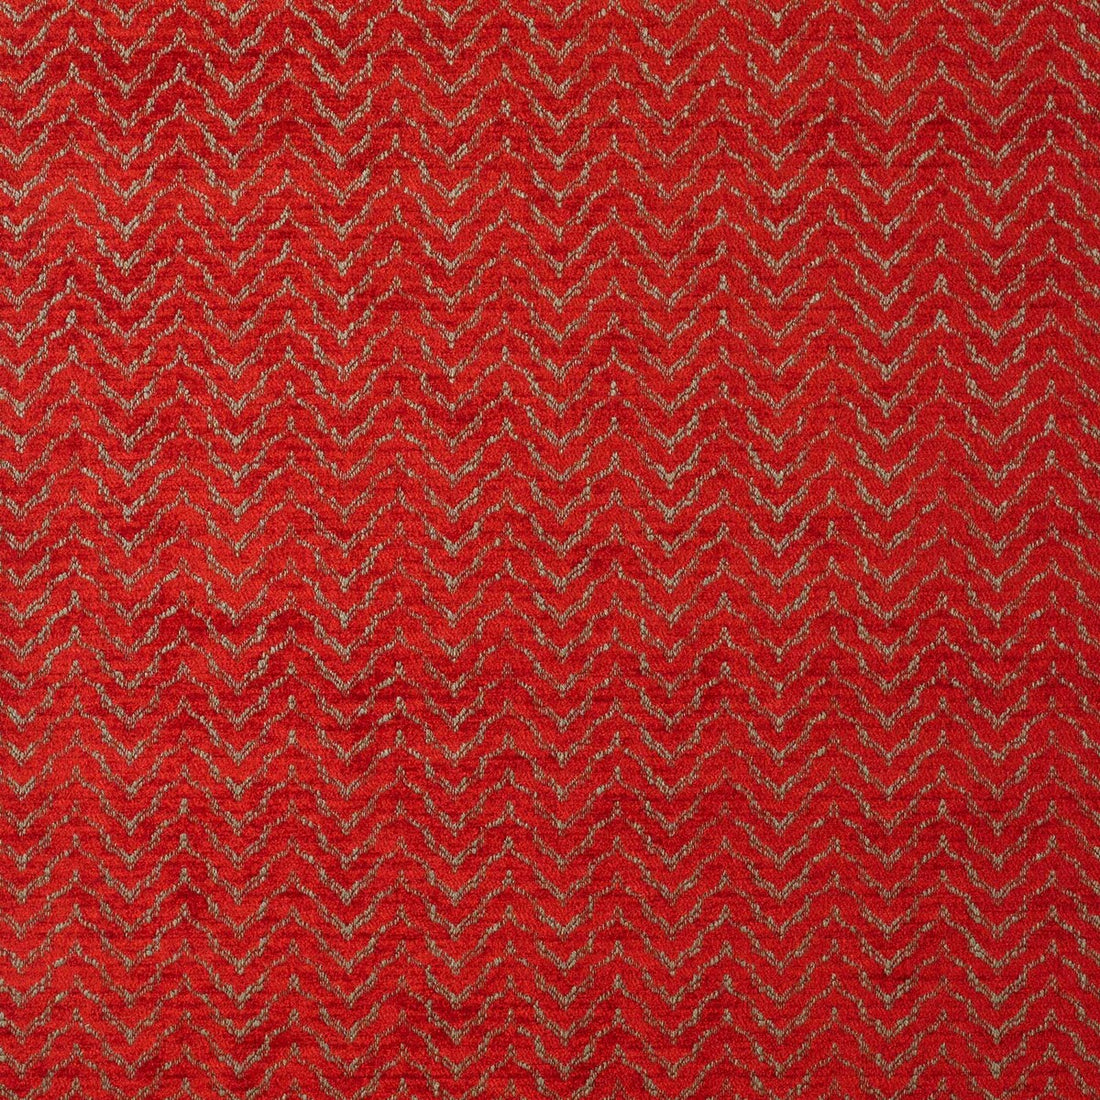 Sella fabric in rojo color - pattern GDT5180.009.0 - by Gaston y Daniela in the Lorenzo Castillo II collection